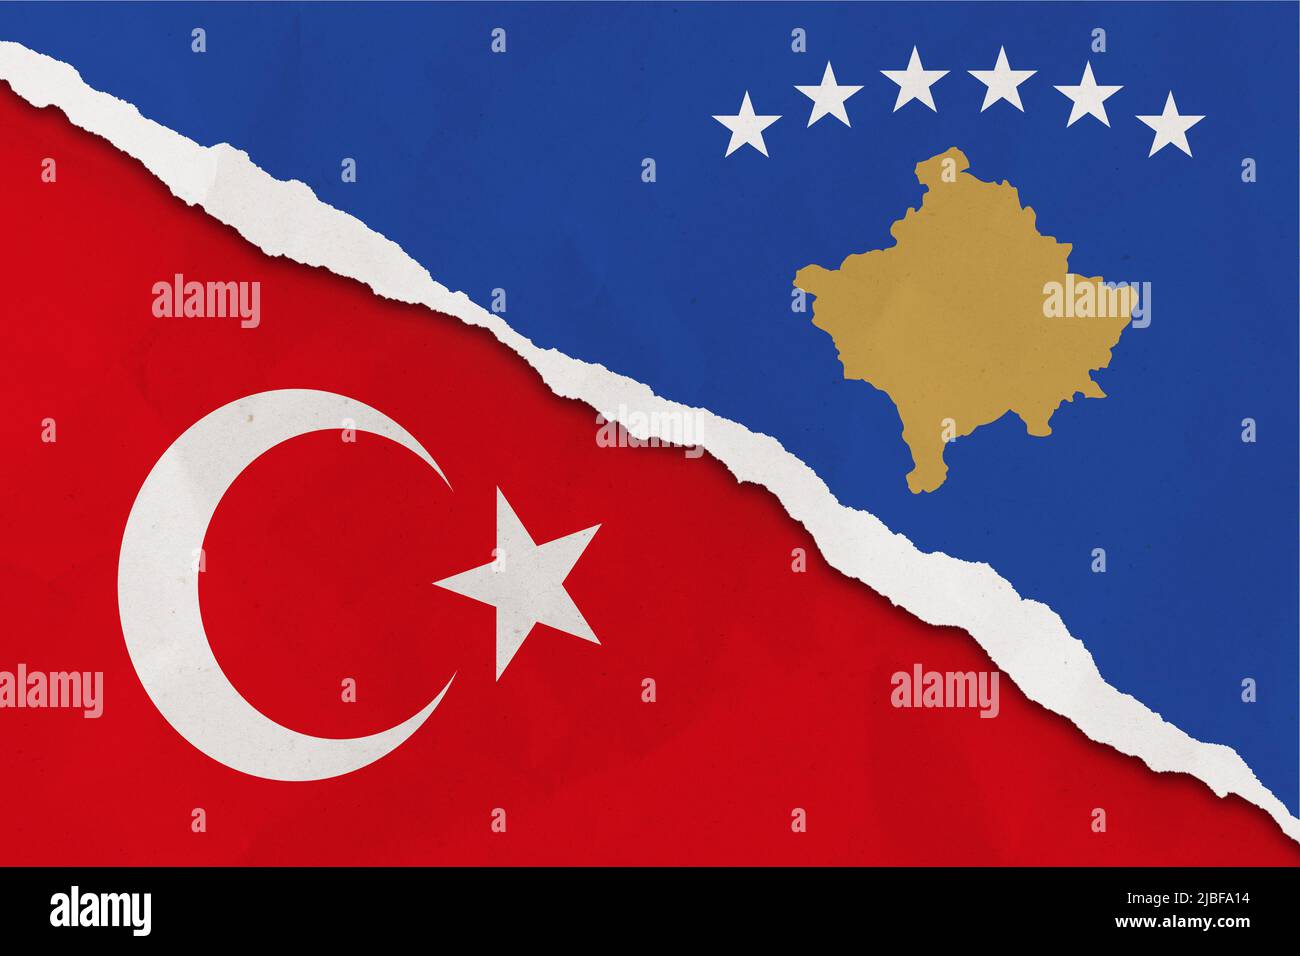 https://c8.alamy.com/comp/2JBFA14/kosovo-and-turkey-flag-ripped-paper-grunge-background-abstract-kosovo-and-turkey-economics-politics-conflicts-war-concept-texture-background-2JBFA14.jpg